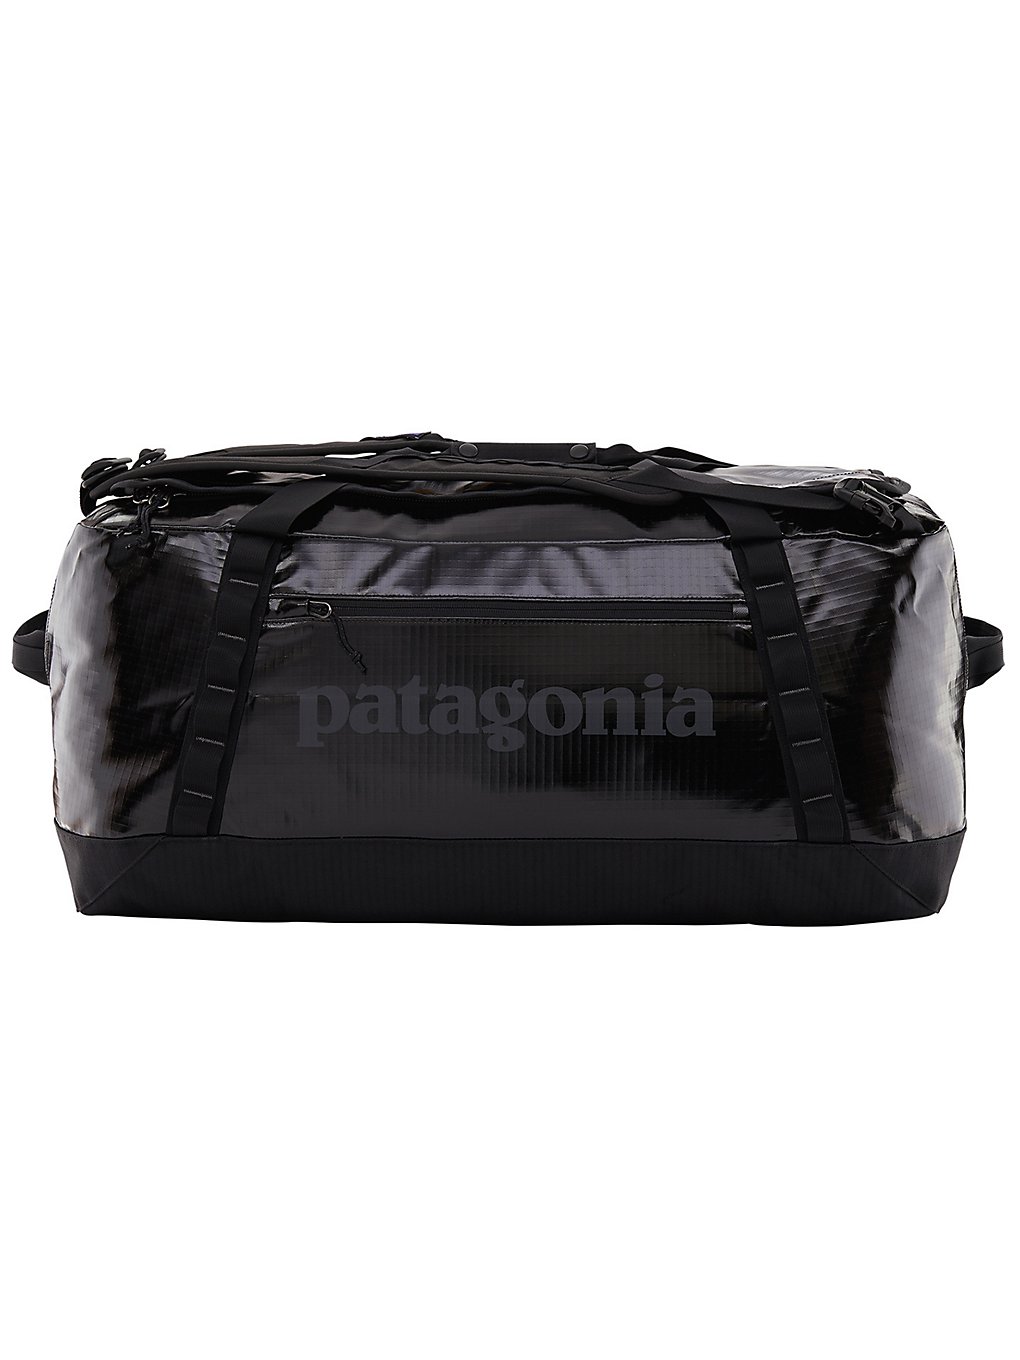 Patagonia Black Hole Duffle 70L Travel Bag noir